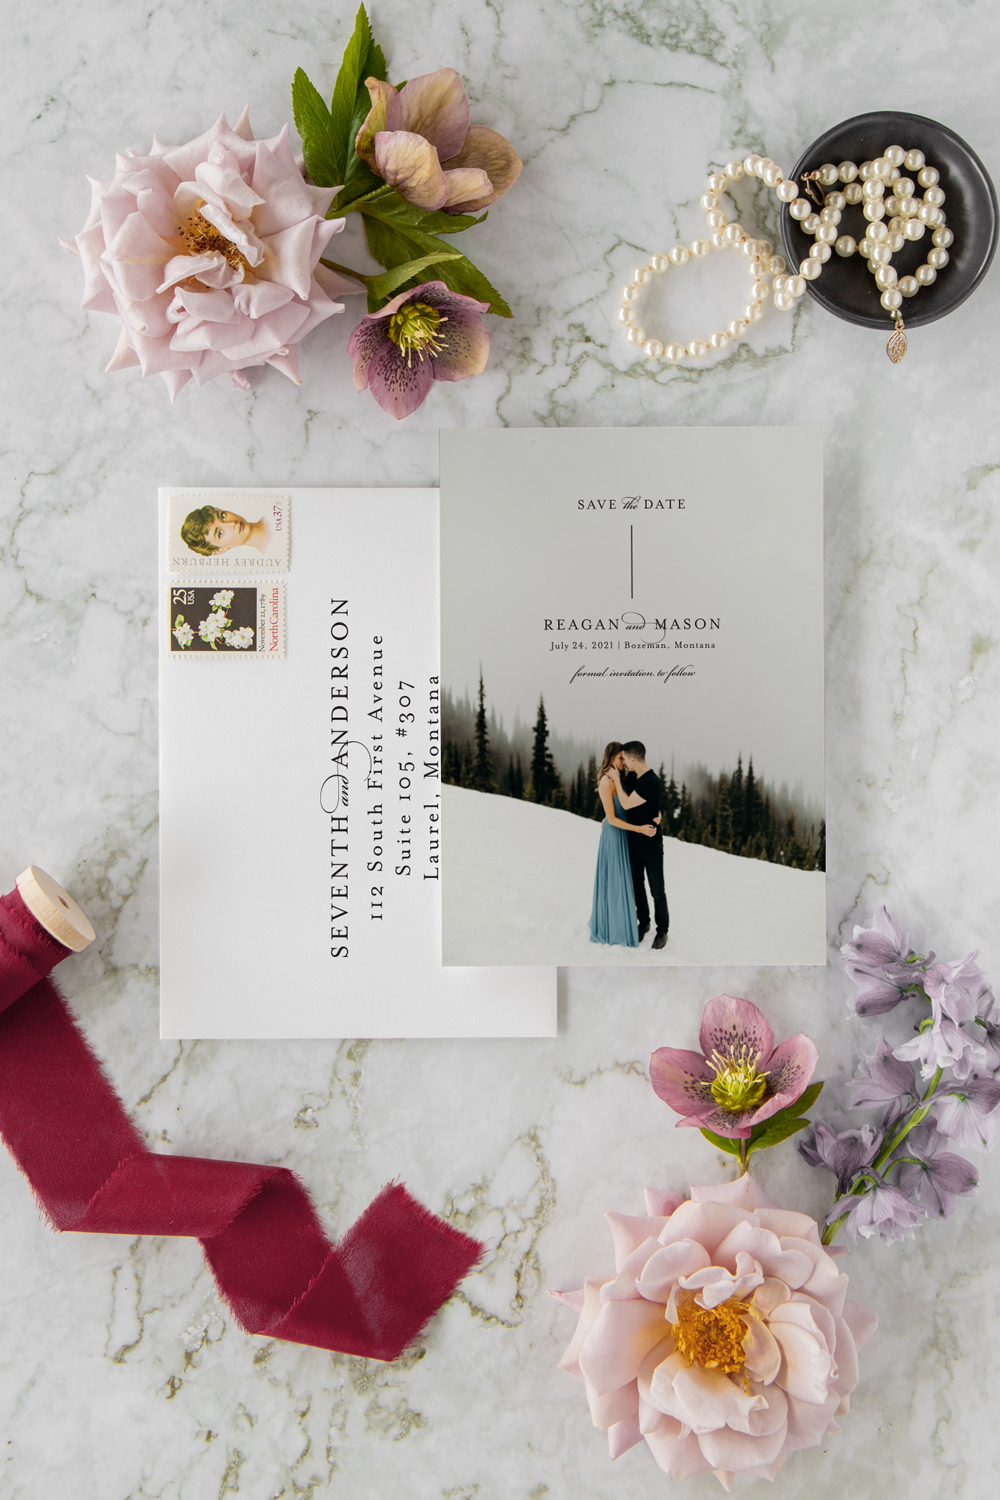 elegant-montana-photo-wedding-save-the-date-cards-seventhandanderson